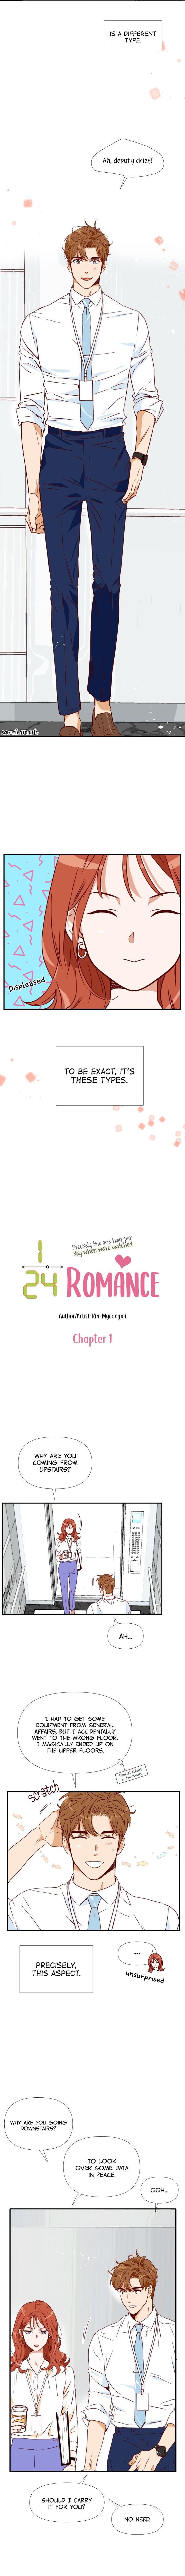 1/24 Romance Chapter 1 - Page 11